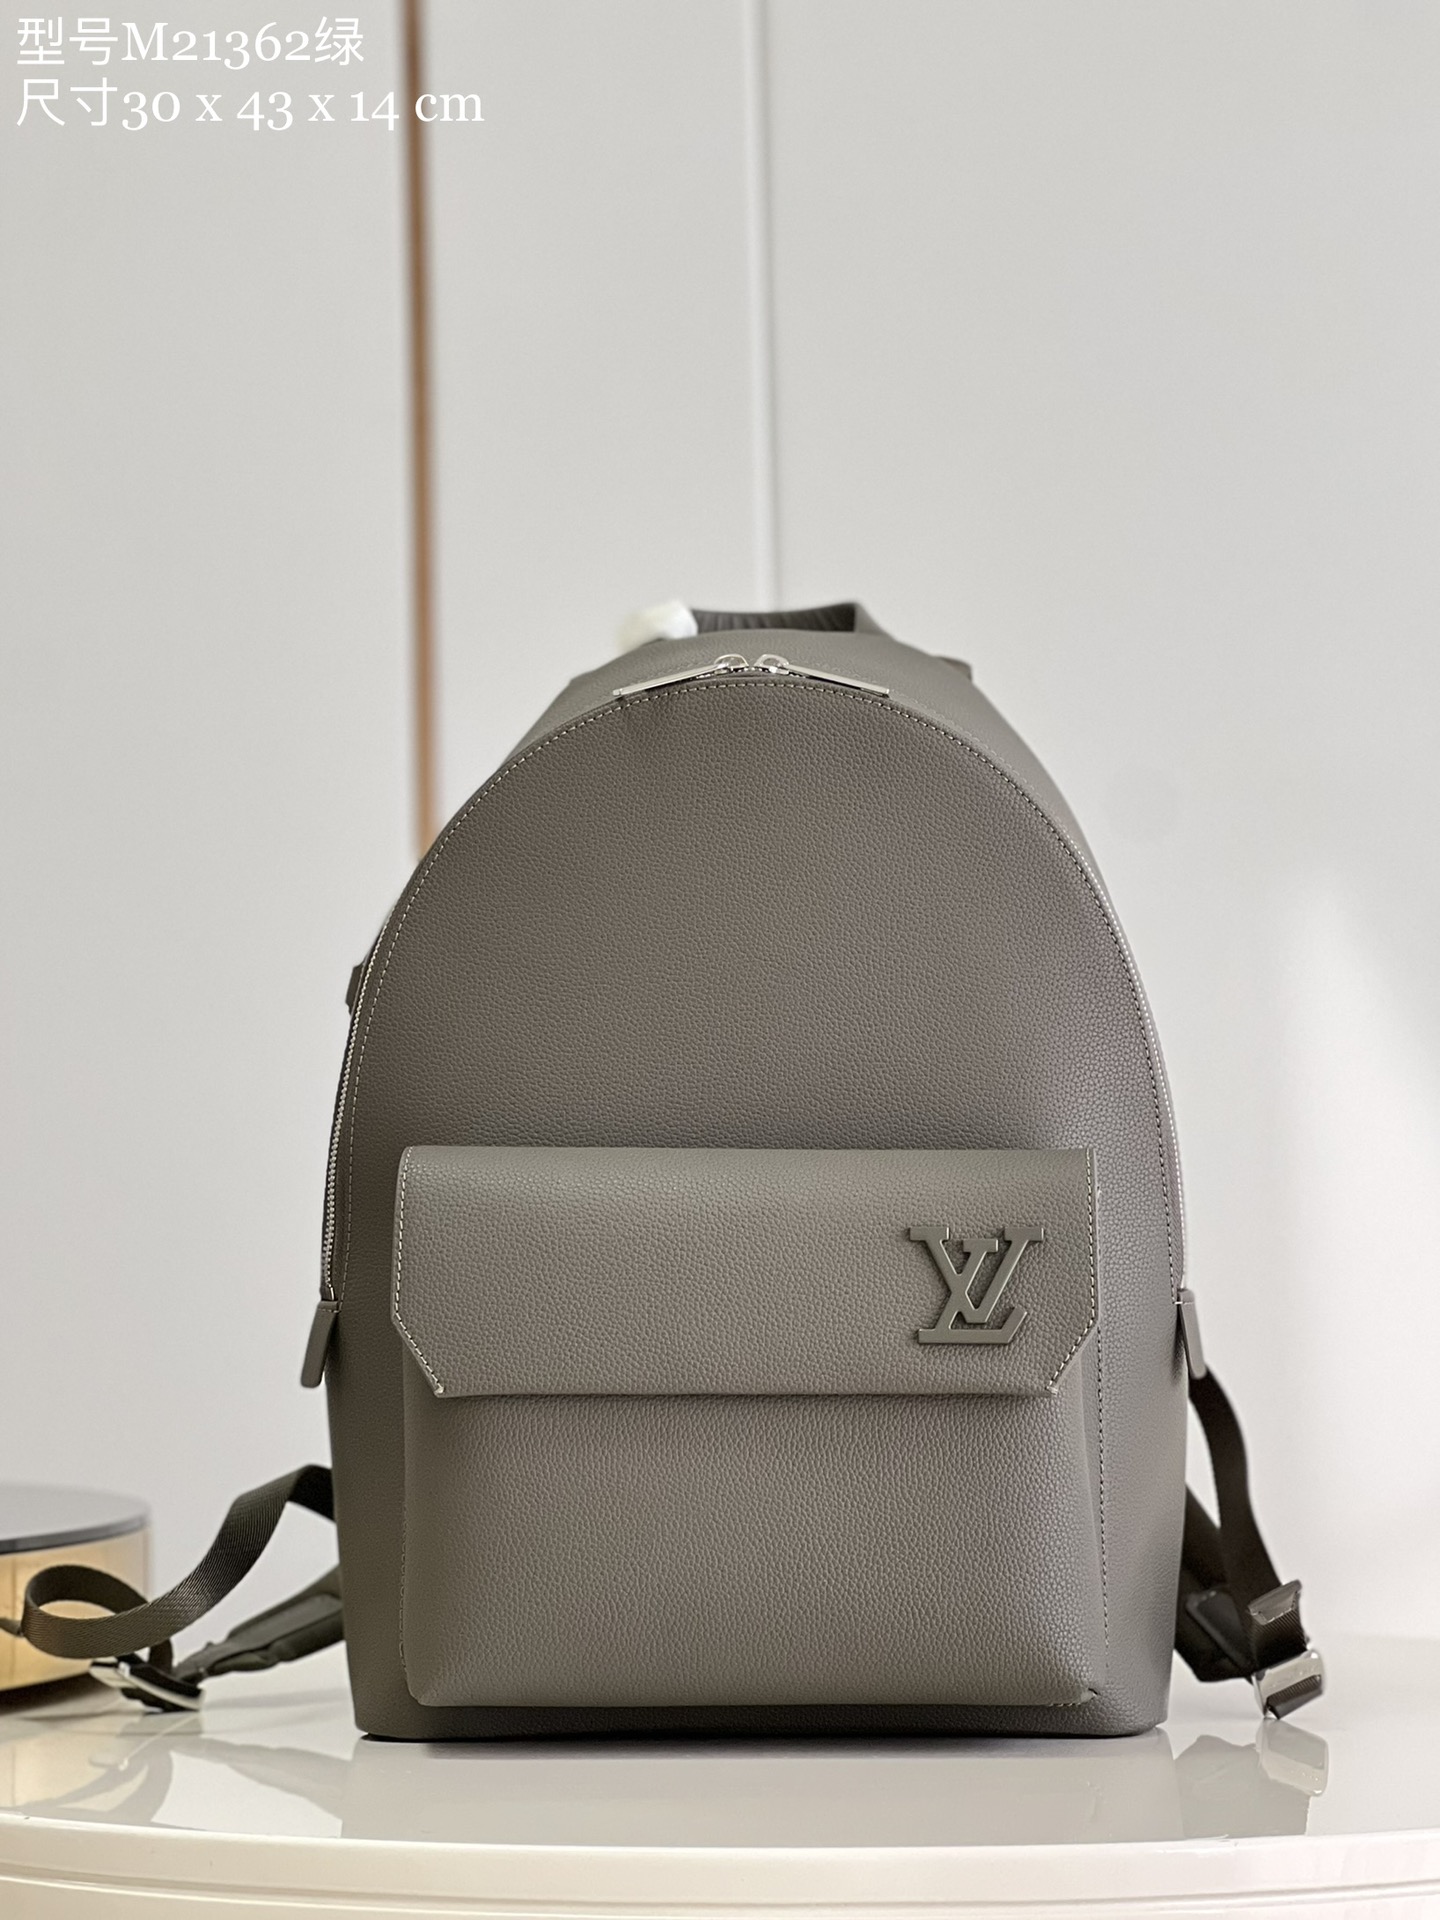 Louis Vuitton Bags Backpack Green Cowhide M21362